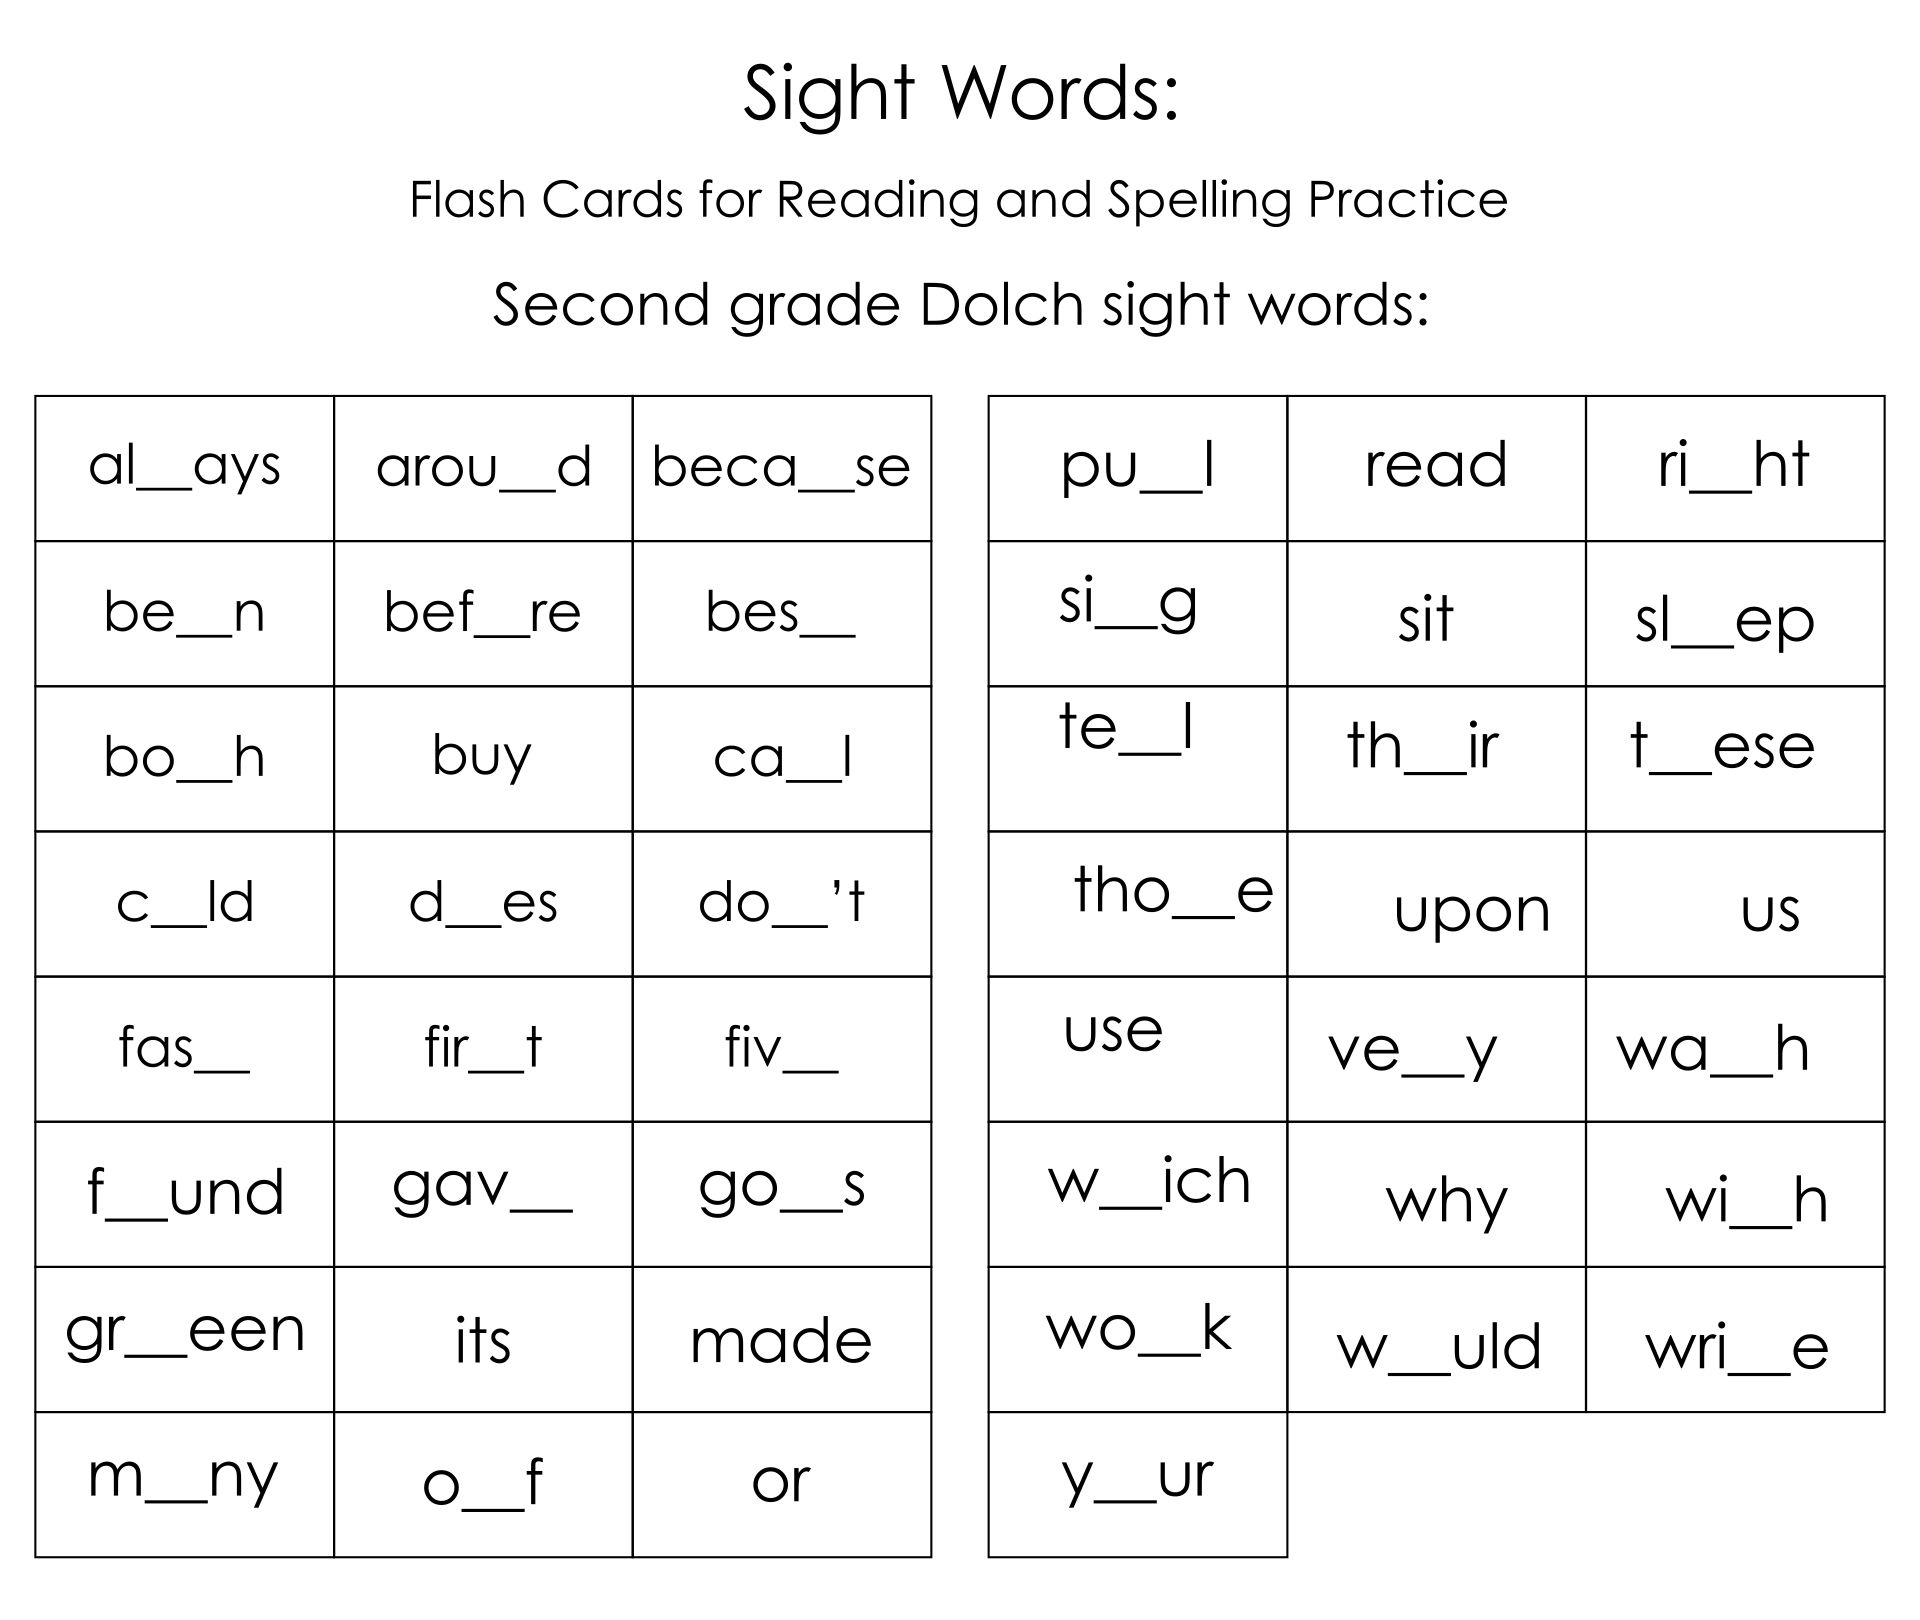 Sight Words For 2nd Grade Worksheets - Martin Printable Calendars